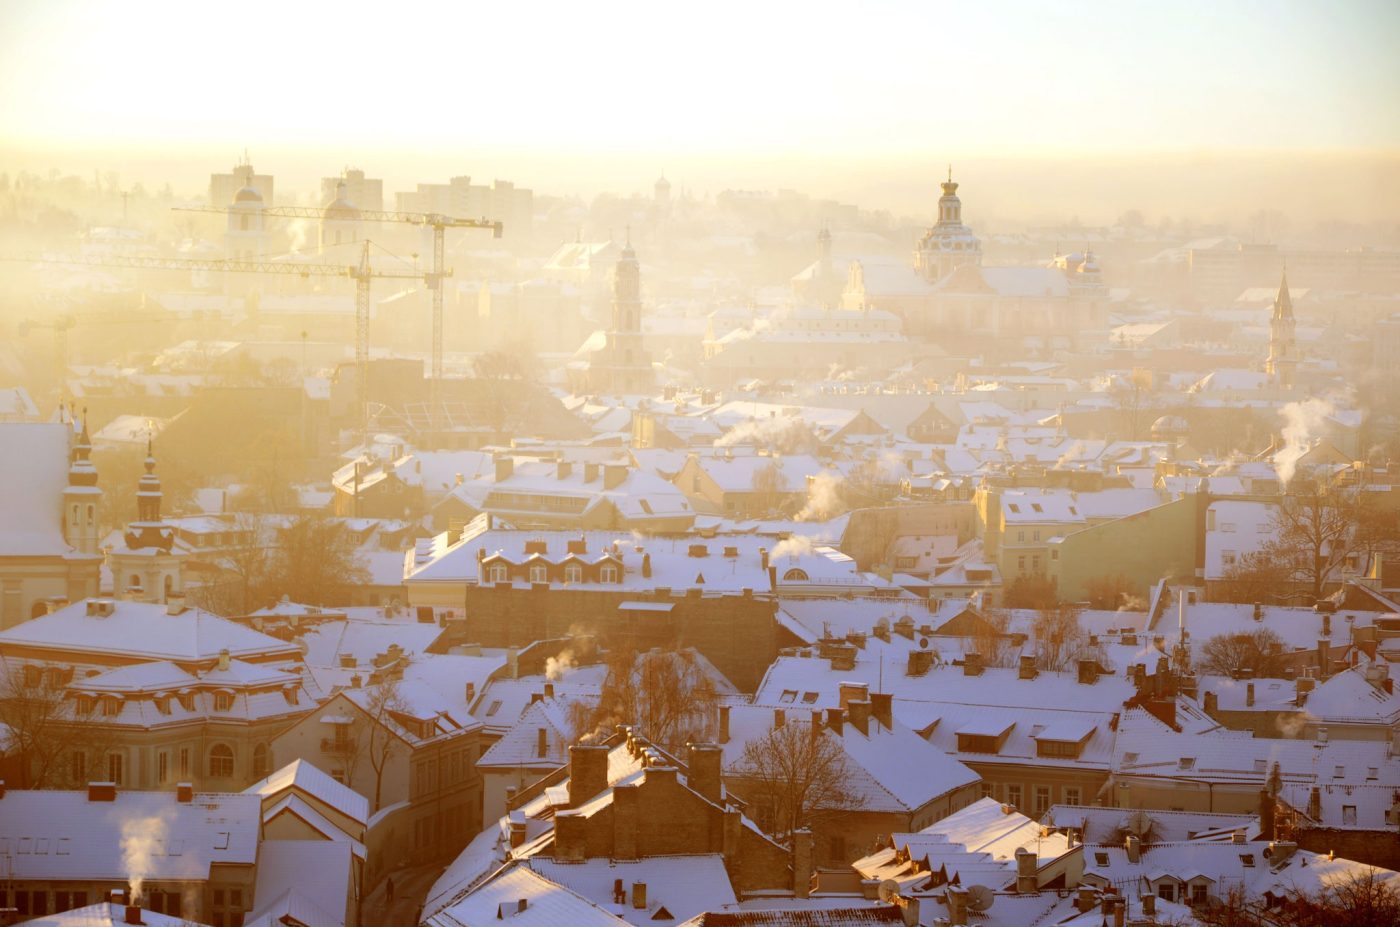 Photo: Foggy Winter Sunrise in Vilnius by domantasm under CC BY 2.0.